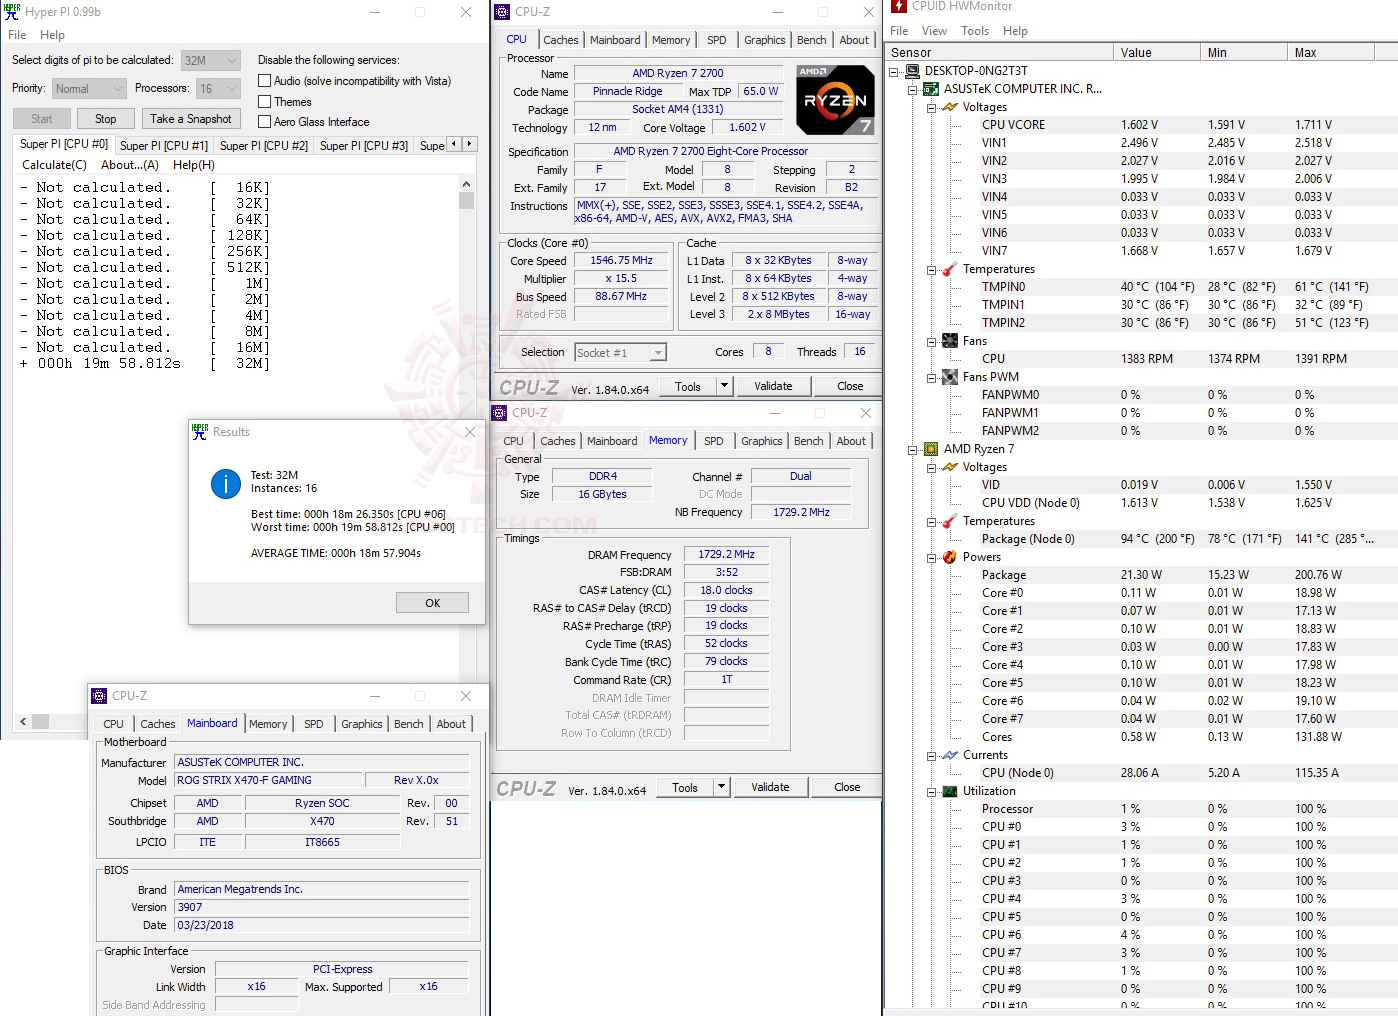 h32 2 AMD RYZEN 7 2700 PROCESSOR REVIEW 